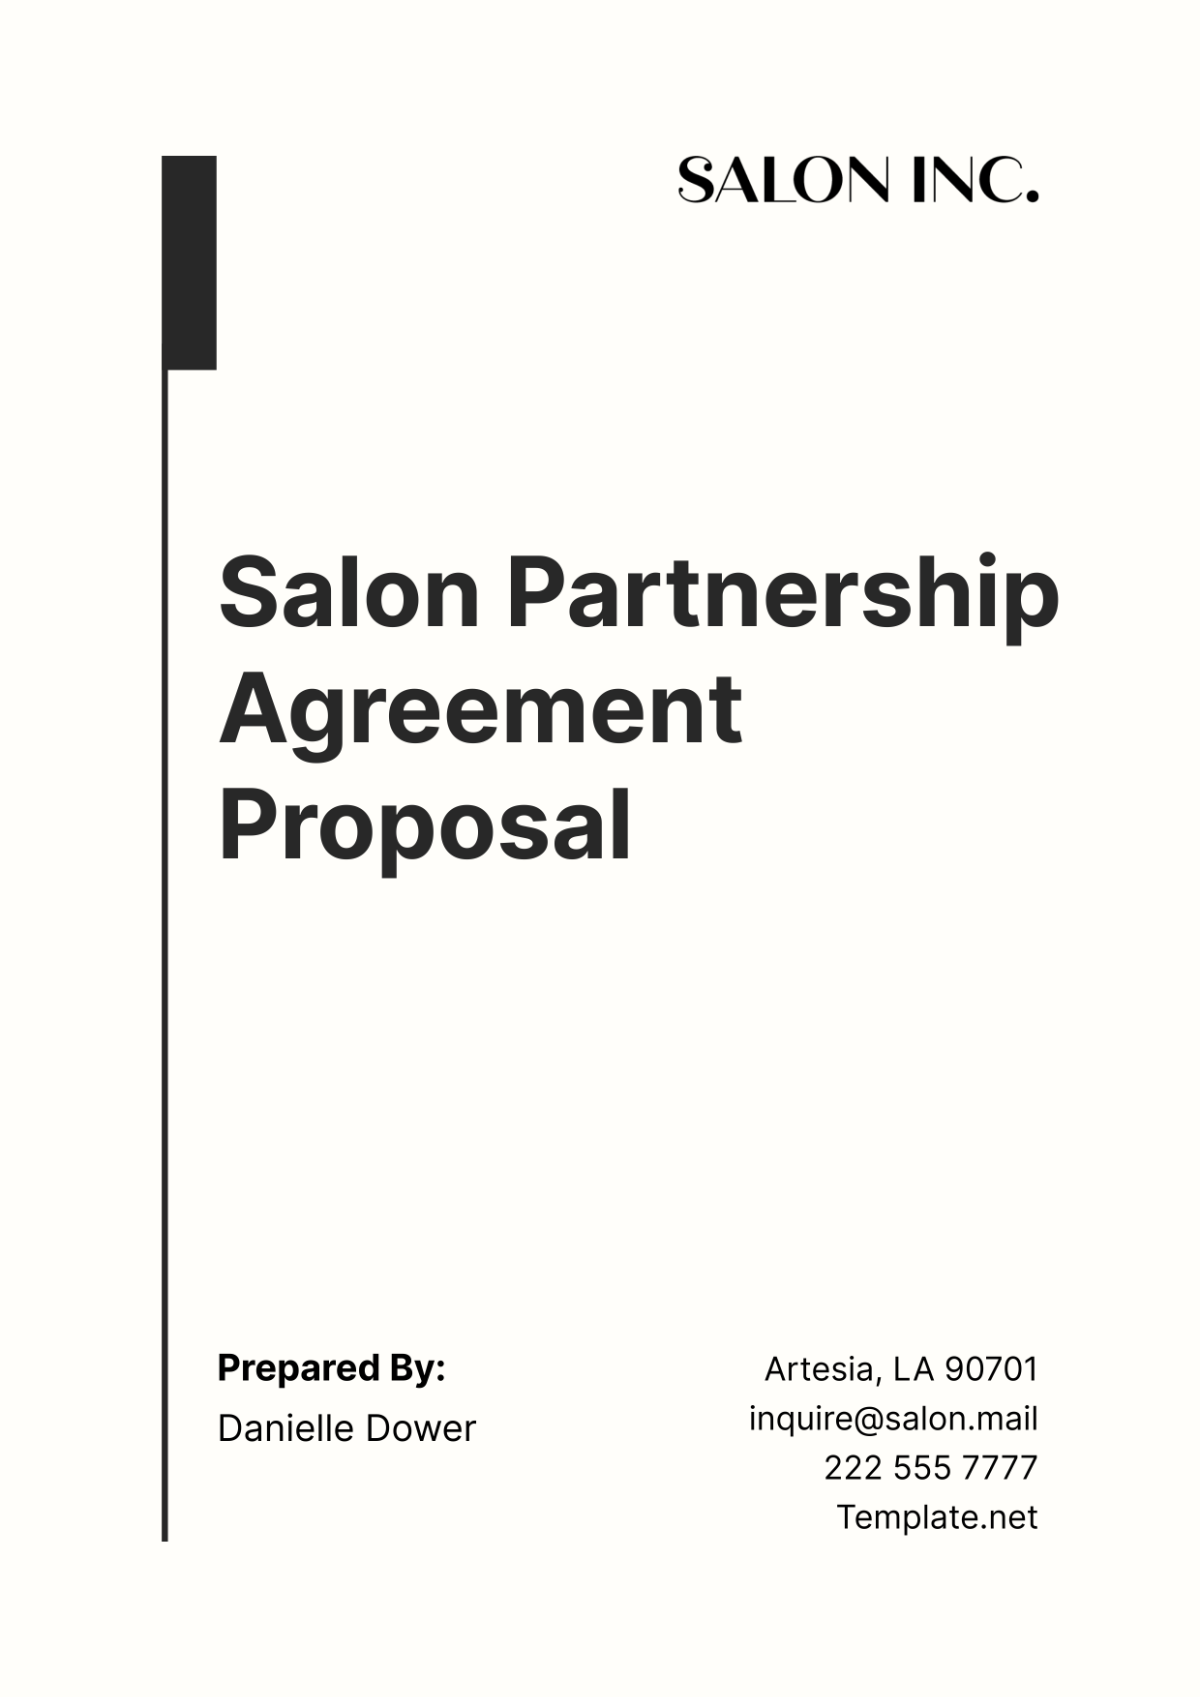 Free Salon Partnership Agreement Proposal Template